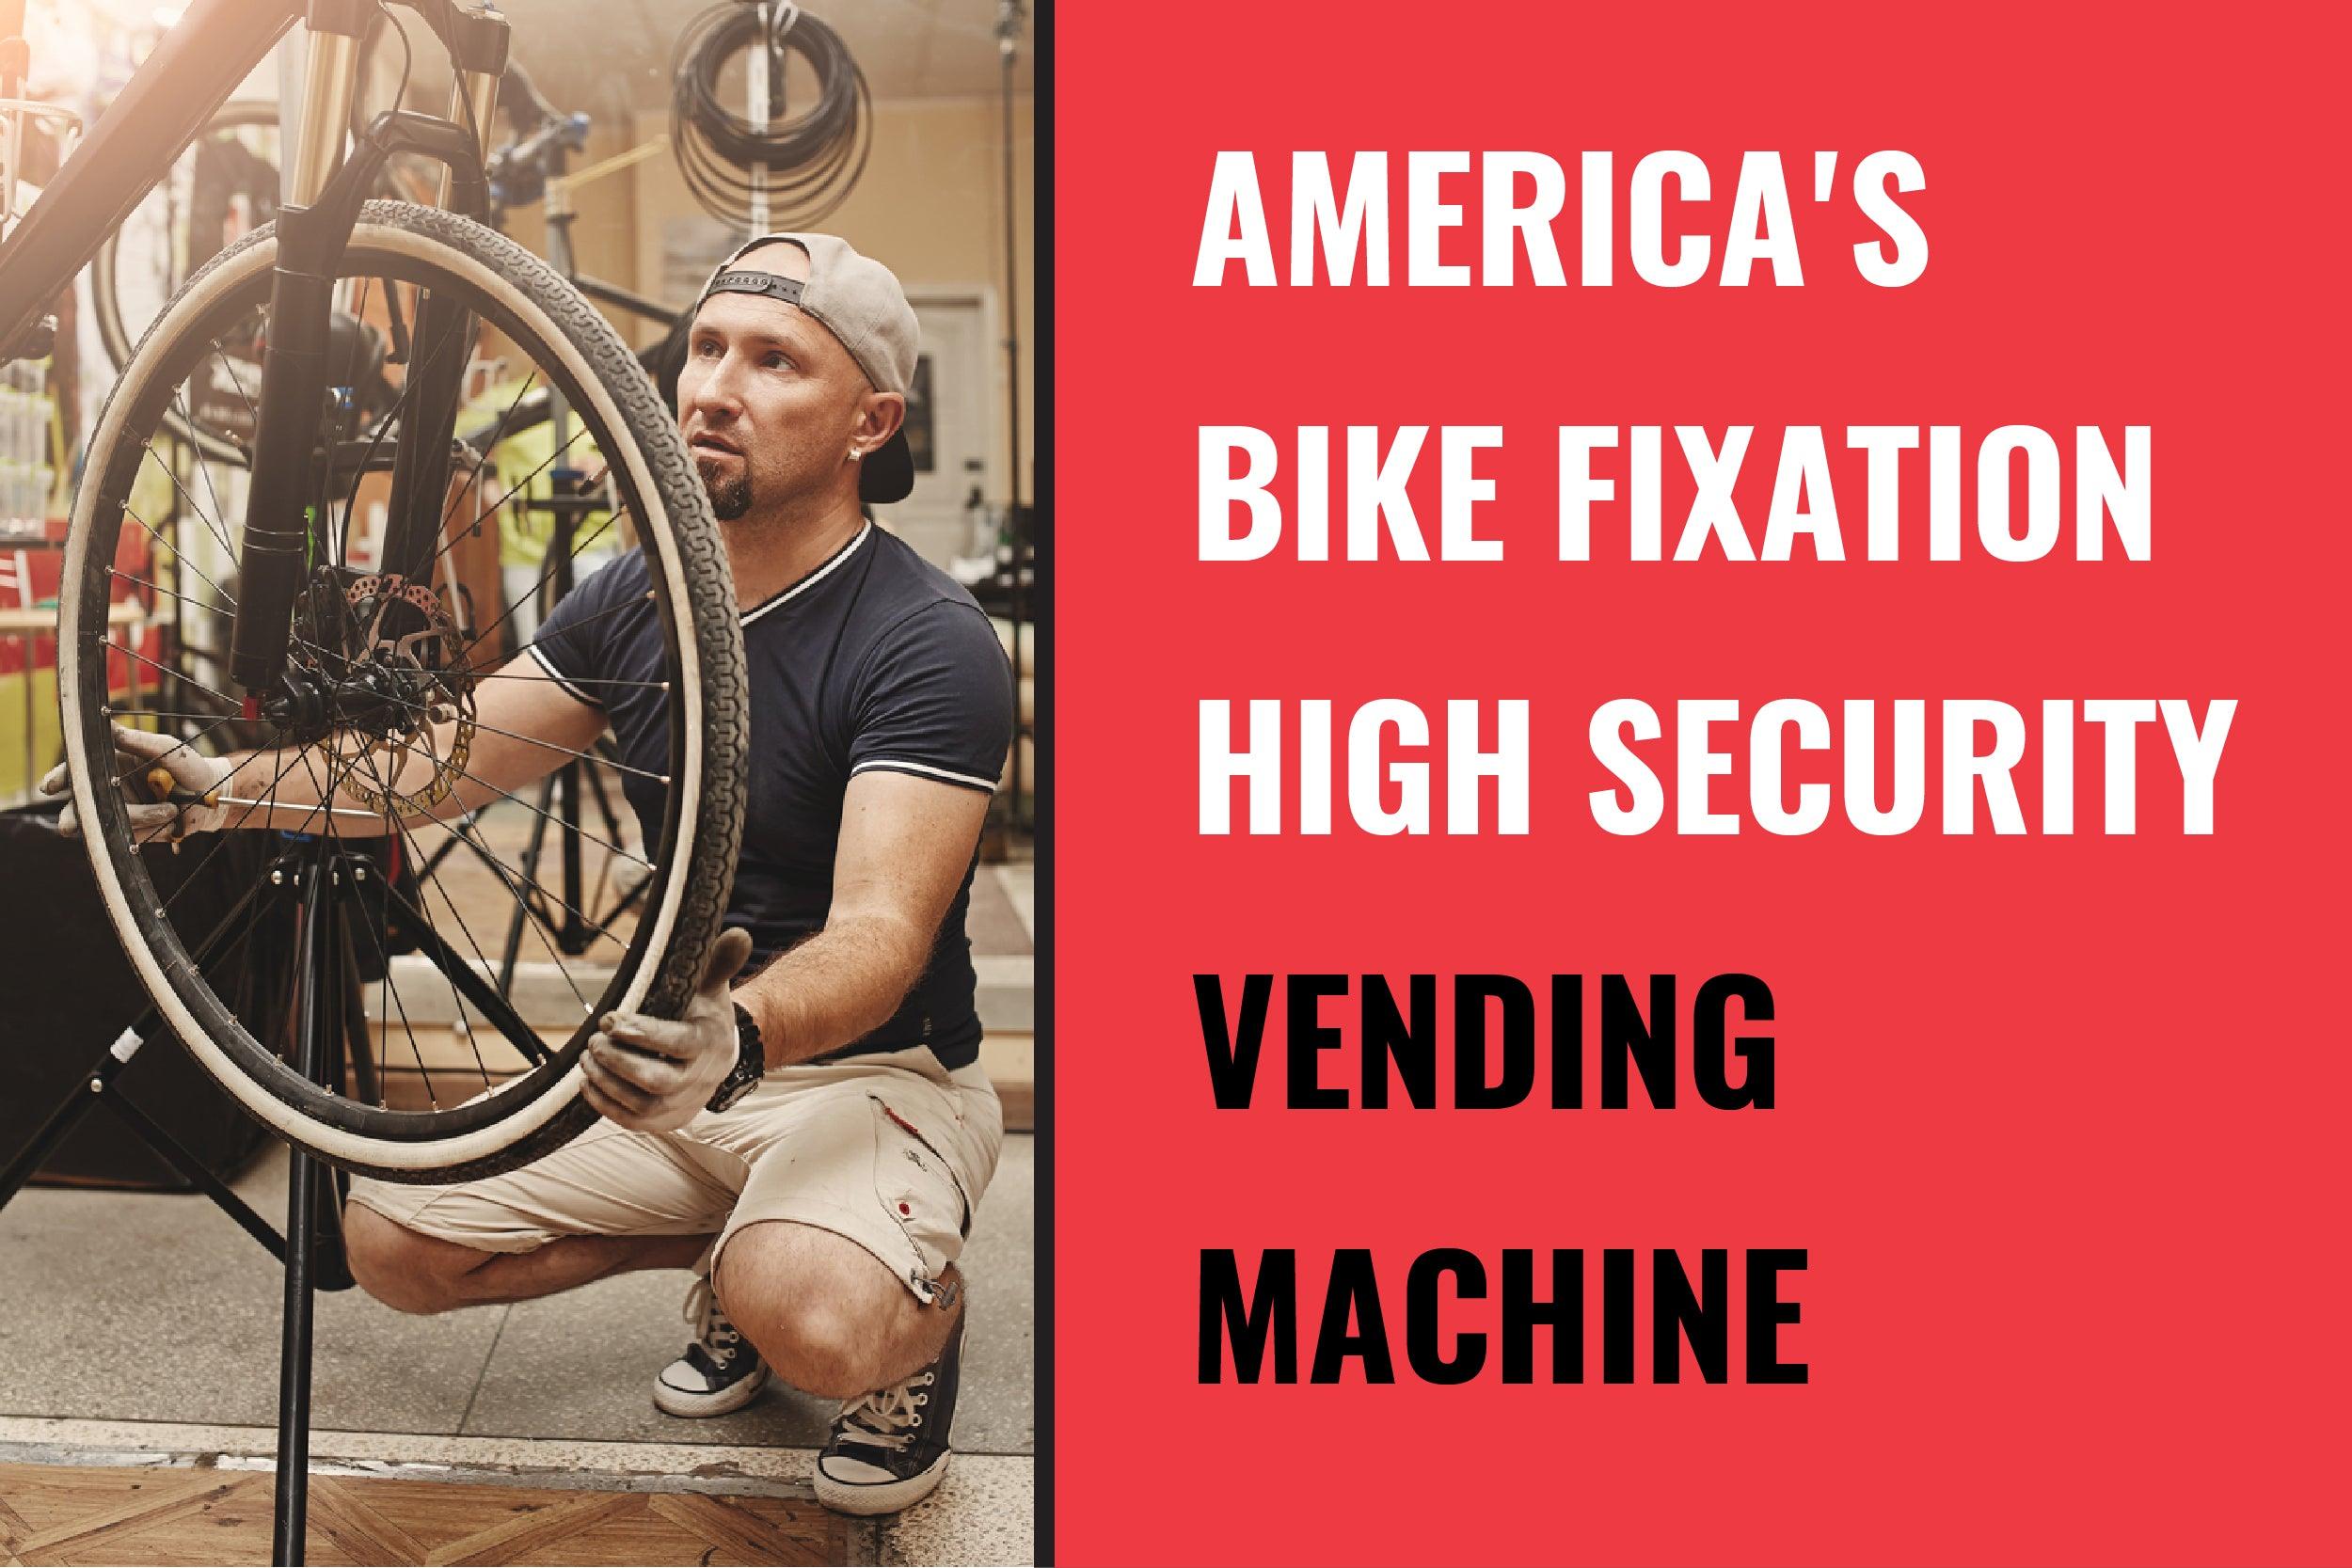 Vending News: America's Bike Fixation High Security Vending Machine - Vendnet